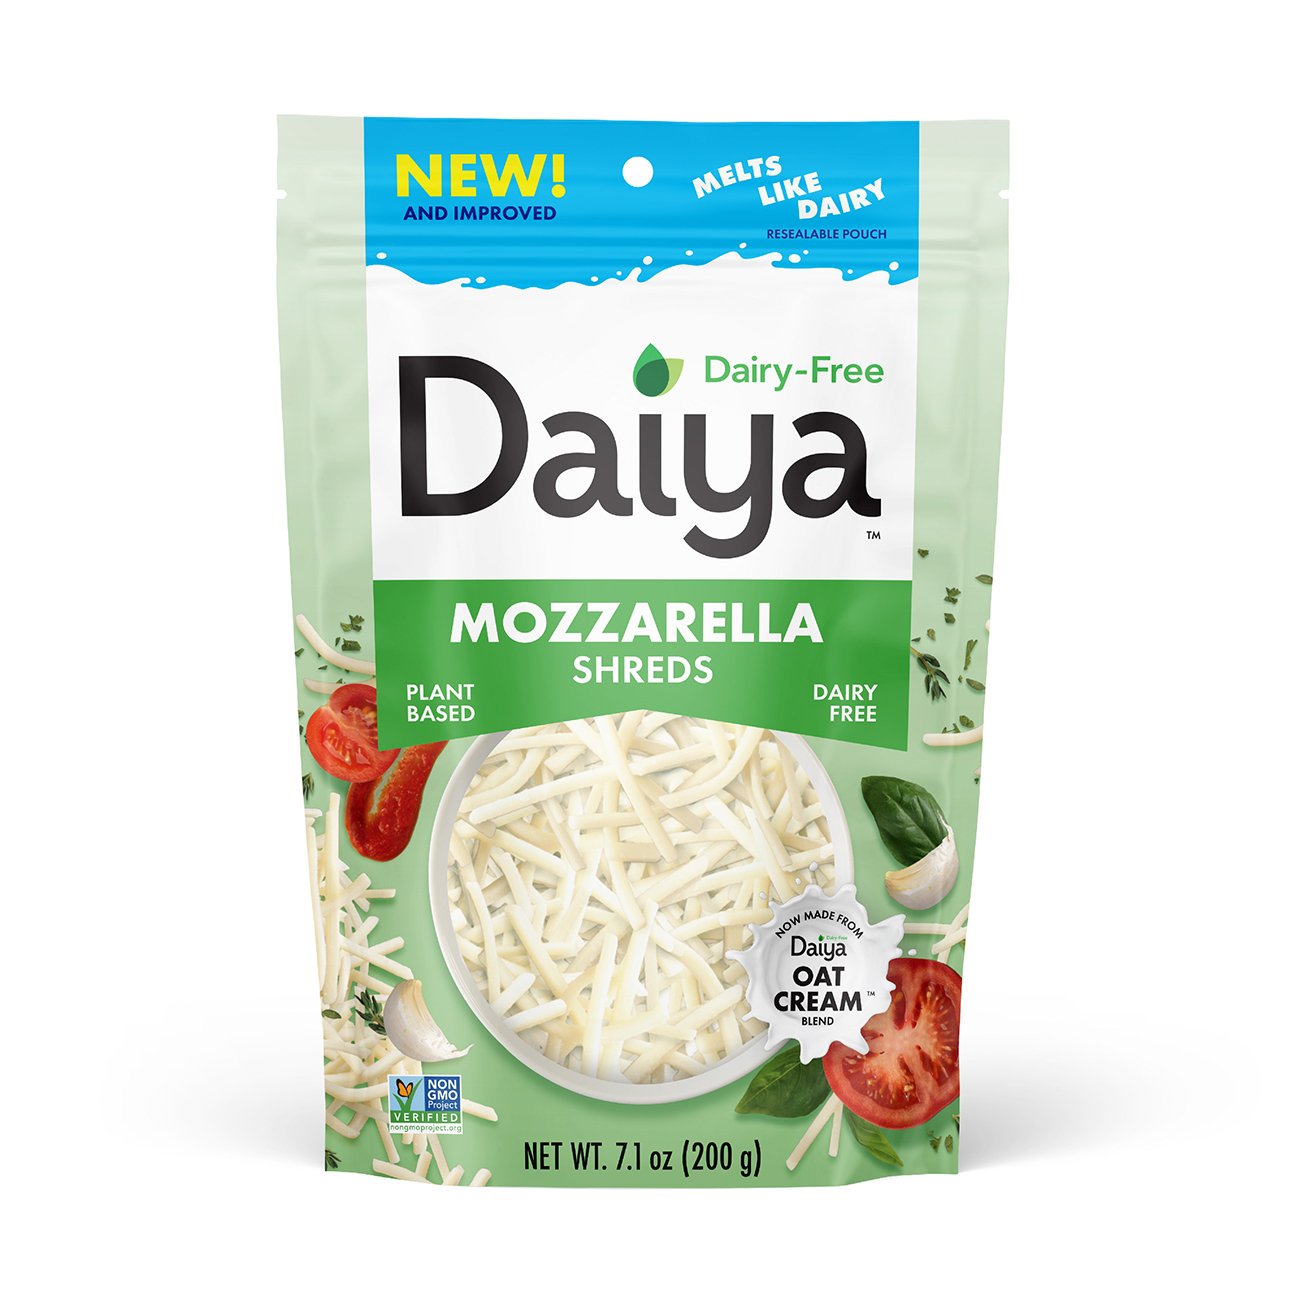 Daiya Mozzarella Style Shreds Vegan Cheese Shop Cheese At H E B 